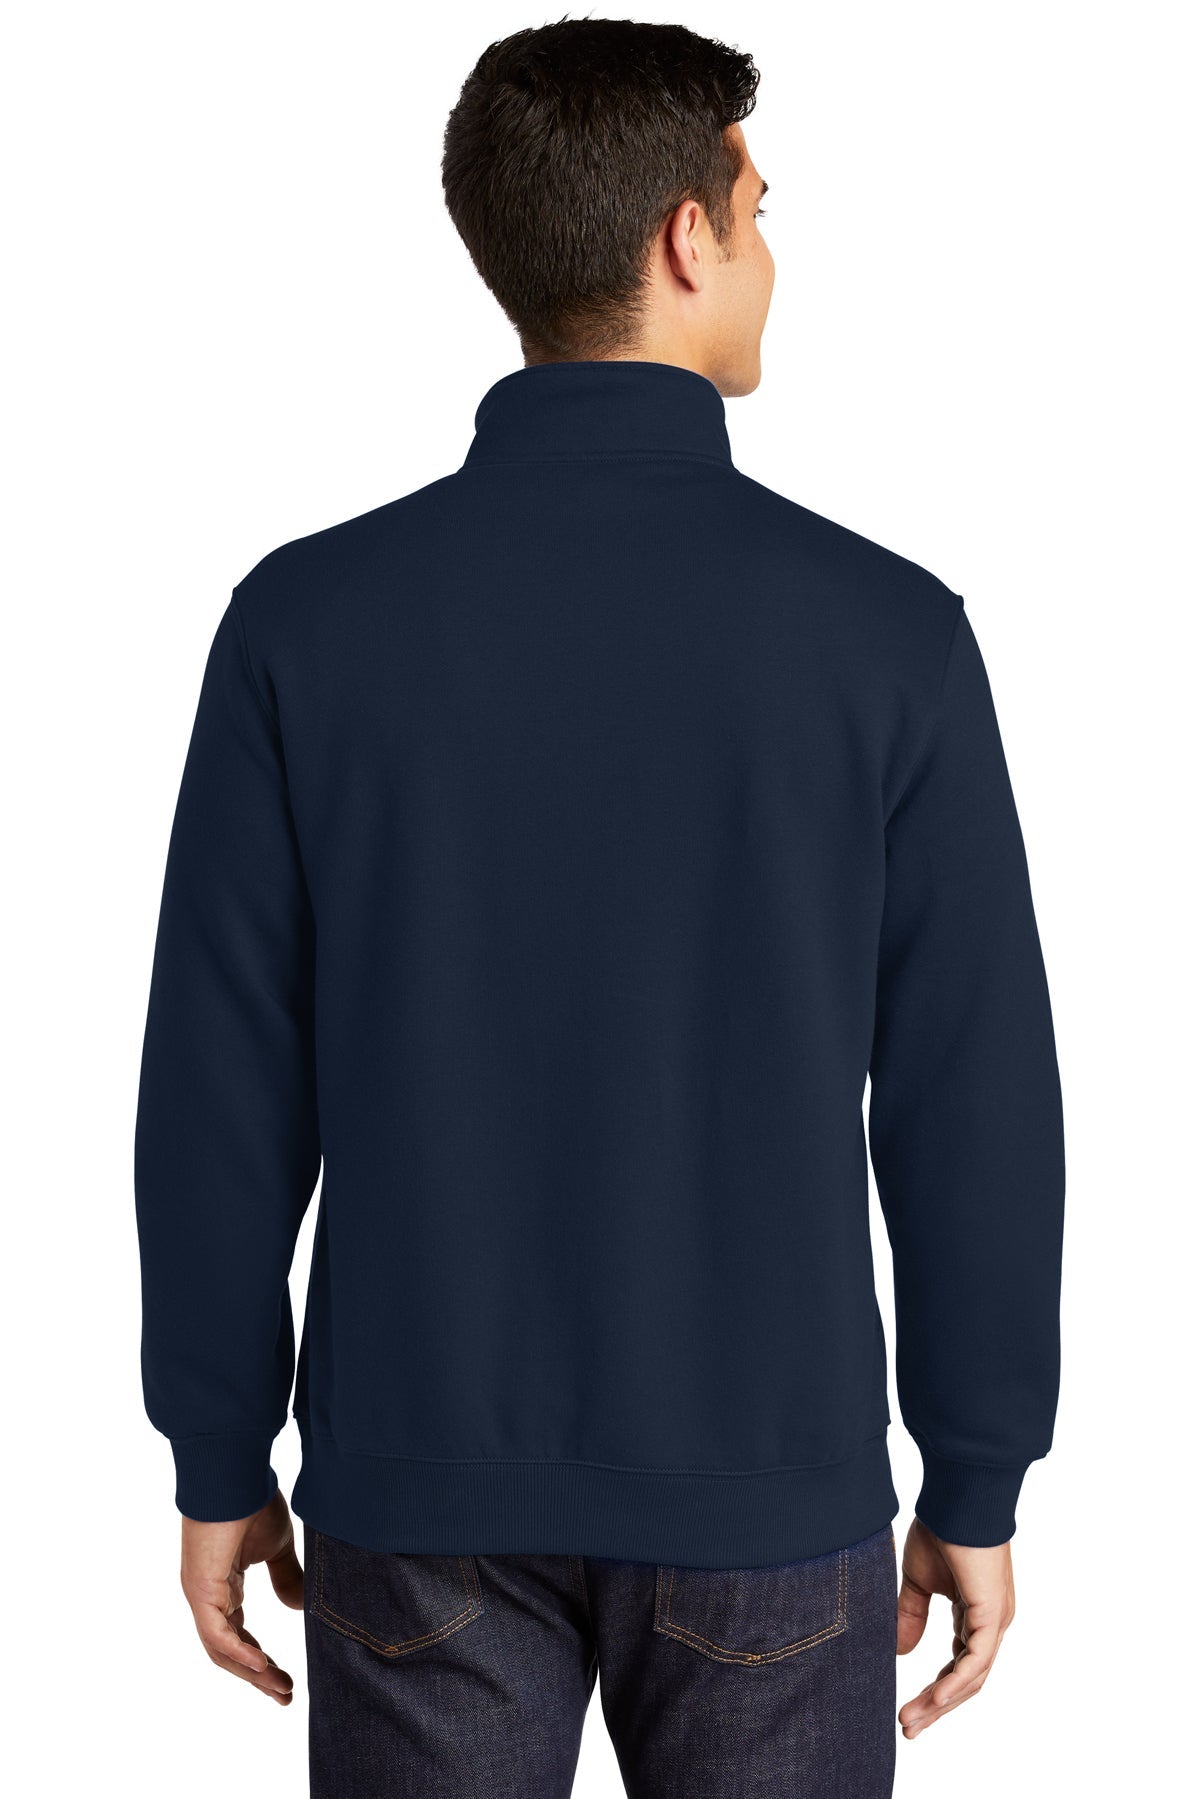 sport-tek_st253 _true navy_company_logo_sweatshirts